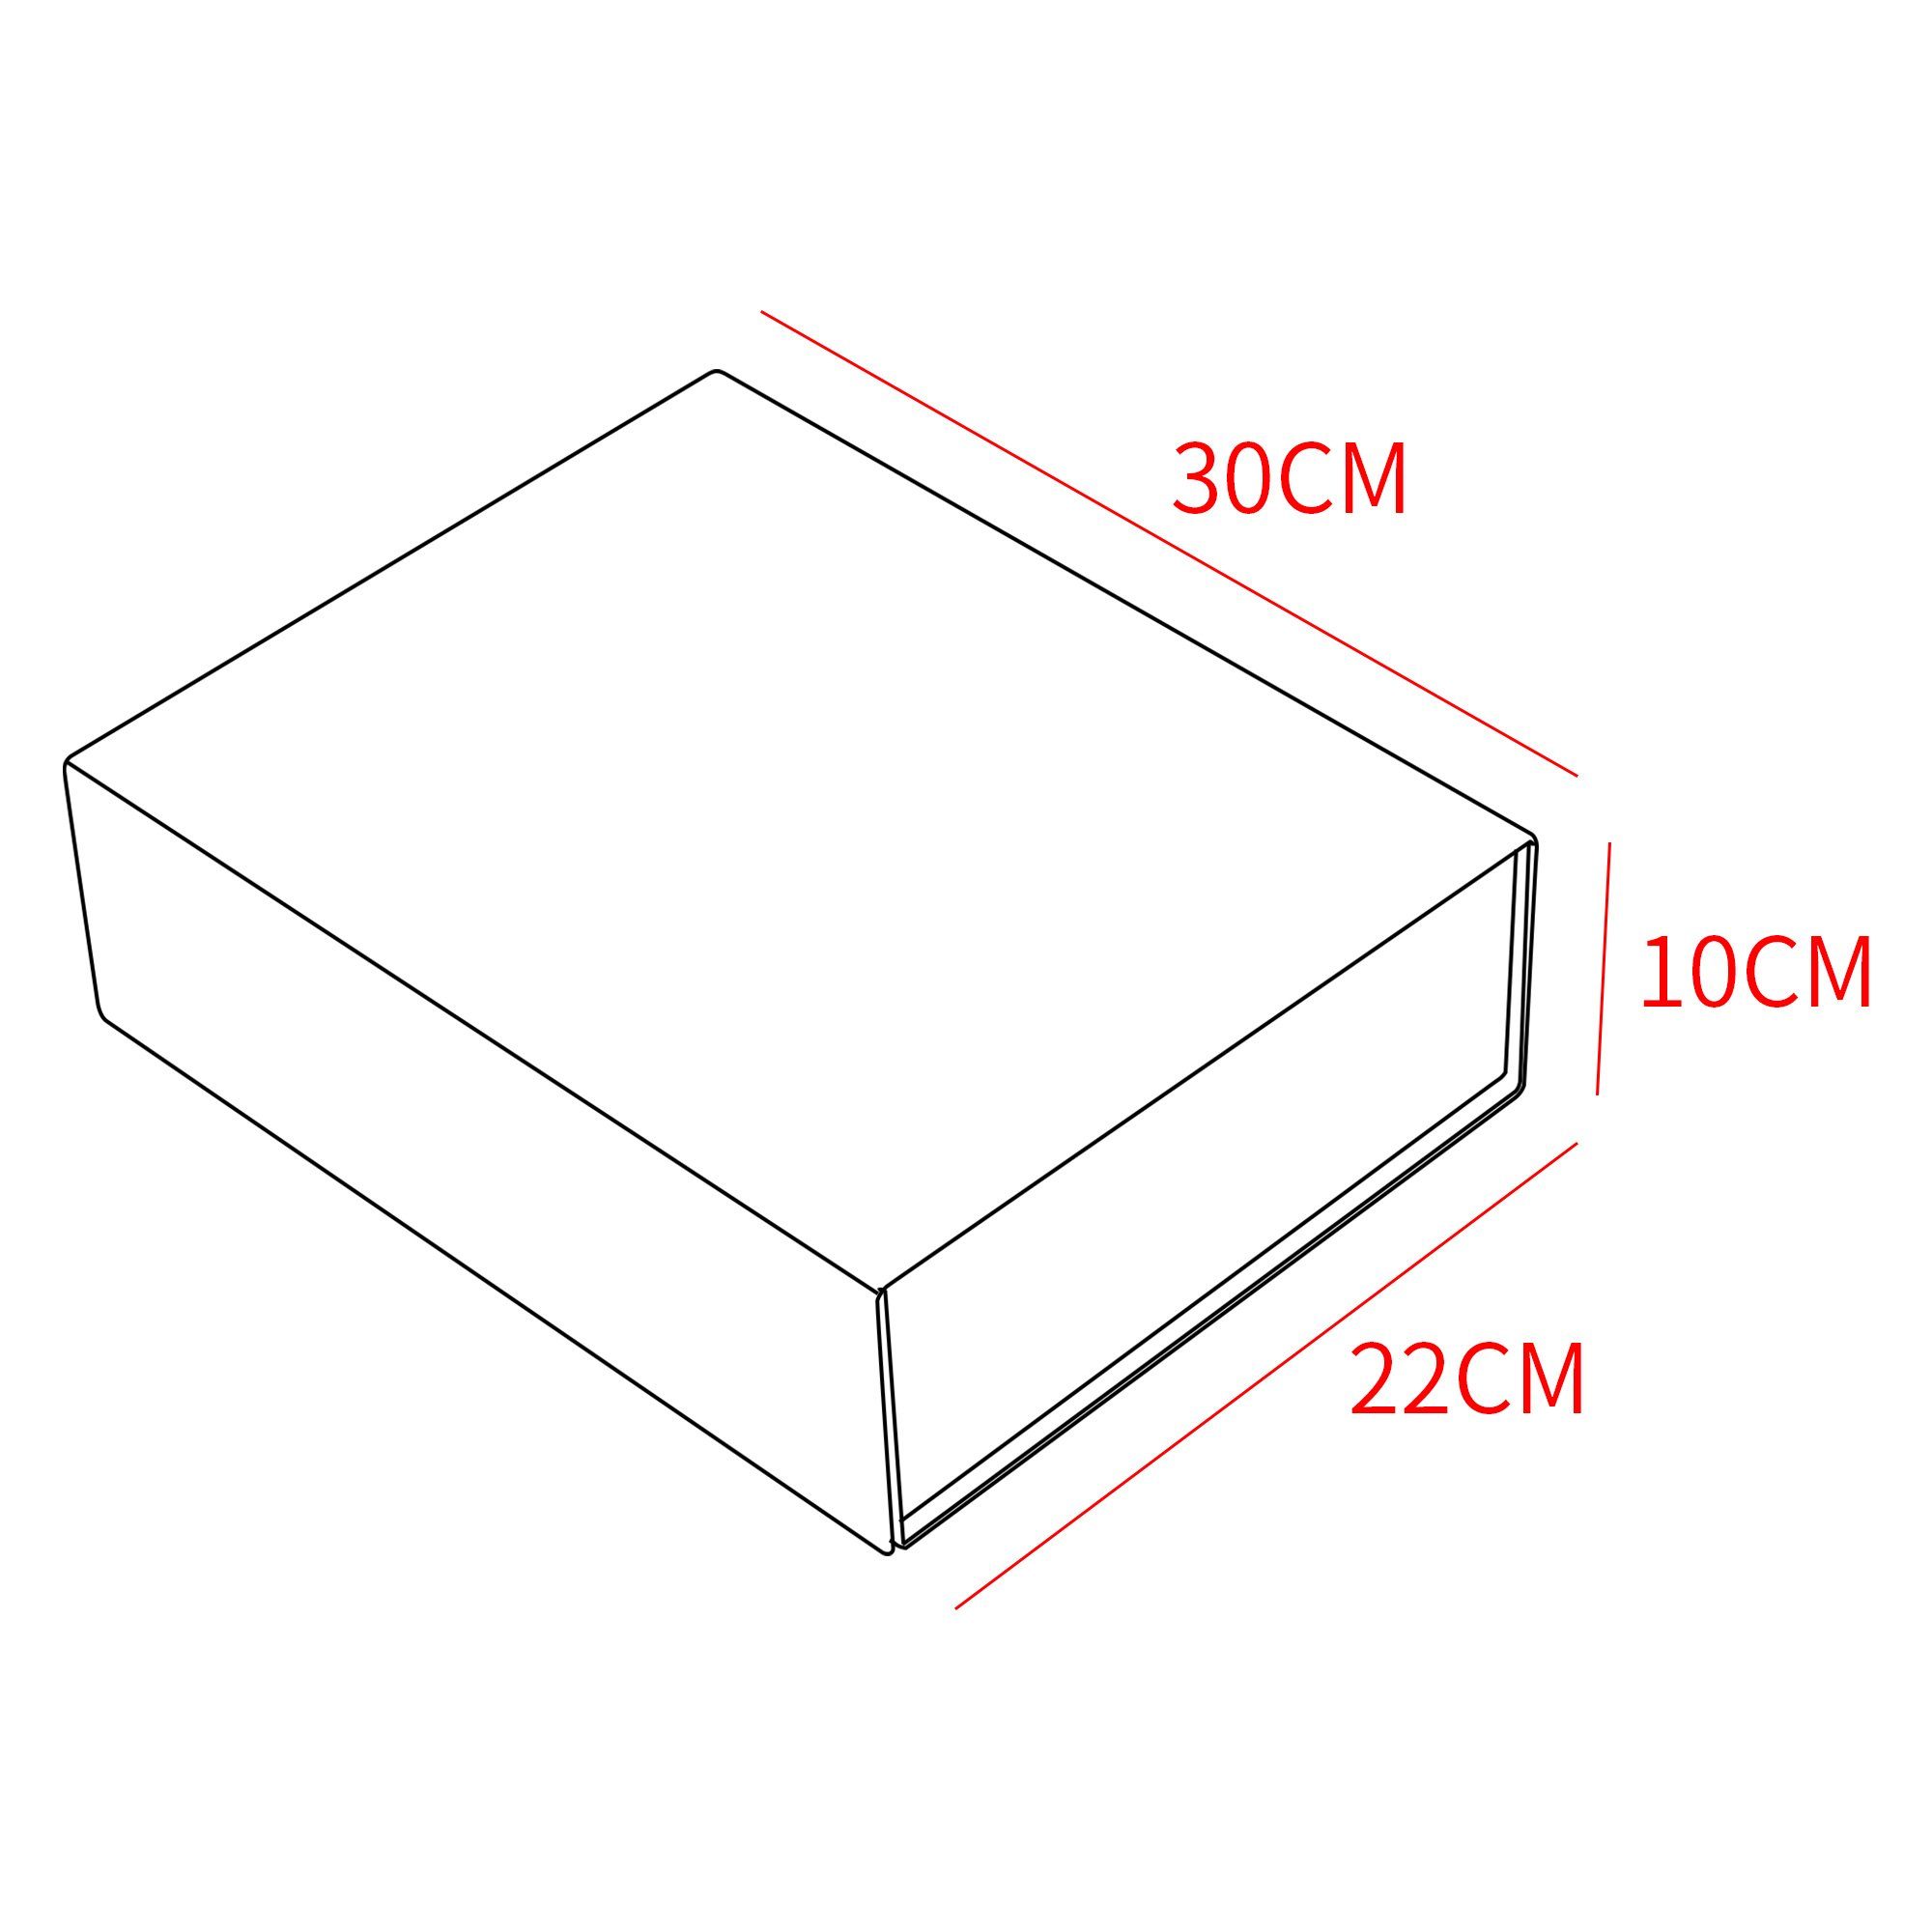 Decorative Reusable Box Gift Box, Aufbewahrungsbox Gift Box, Magnetic Rot AdelDream